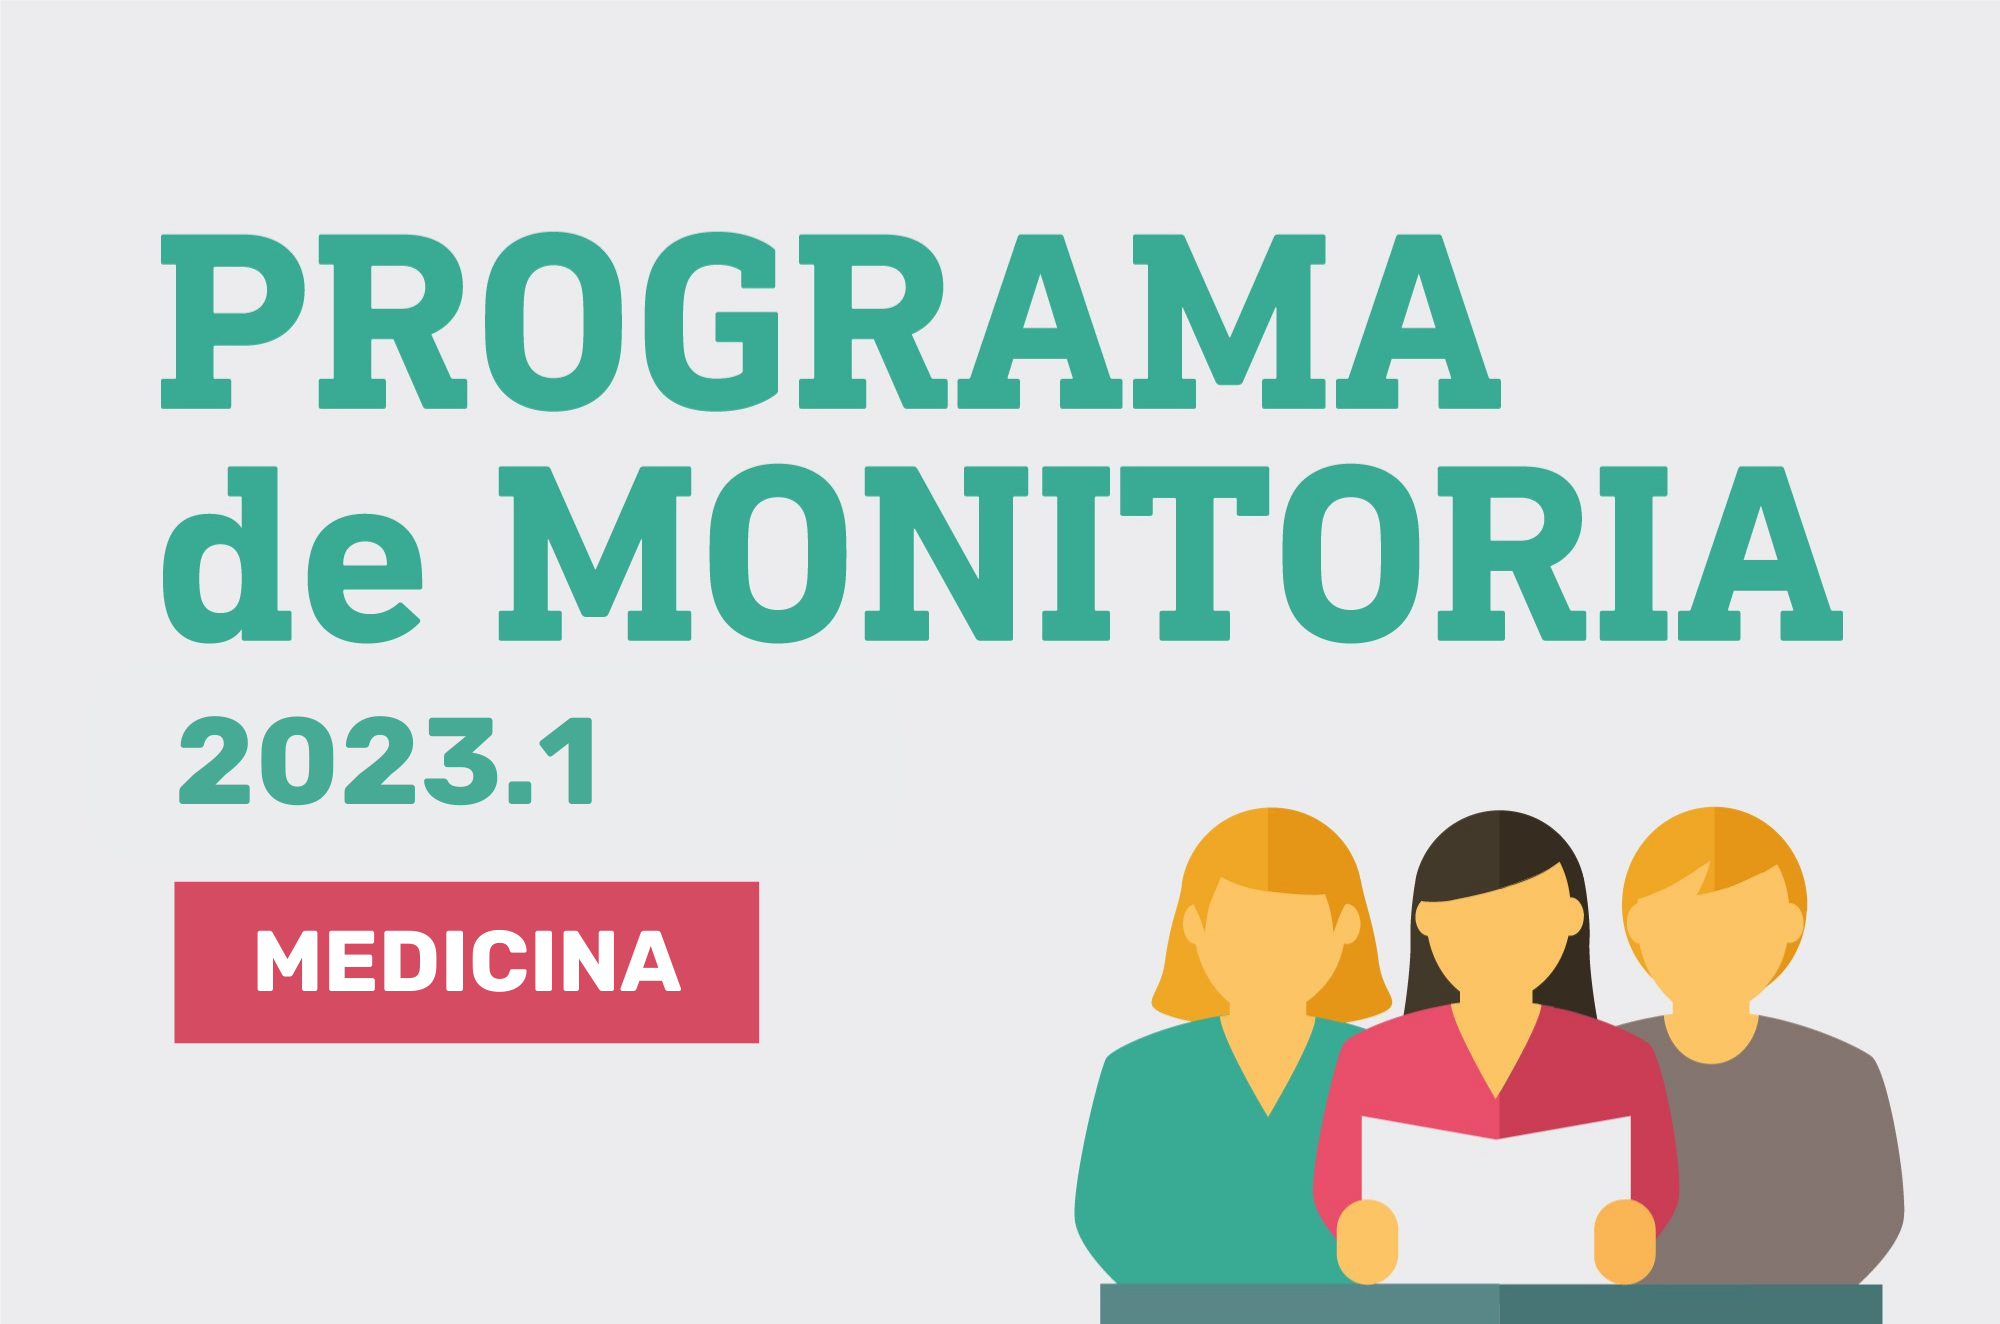 Programa de Monitoria - 2023.1 (Medicina)